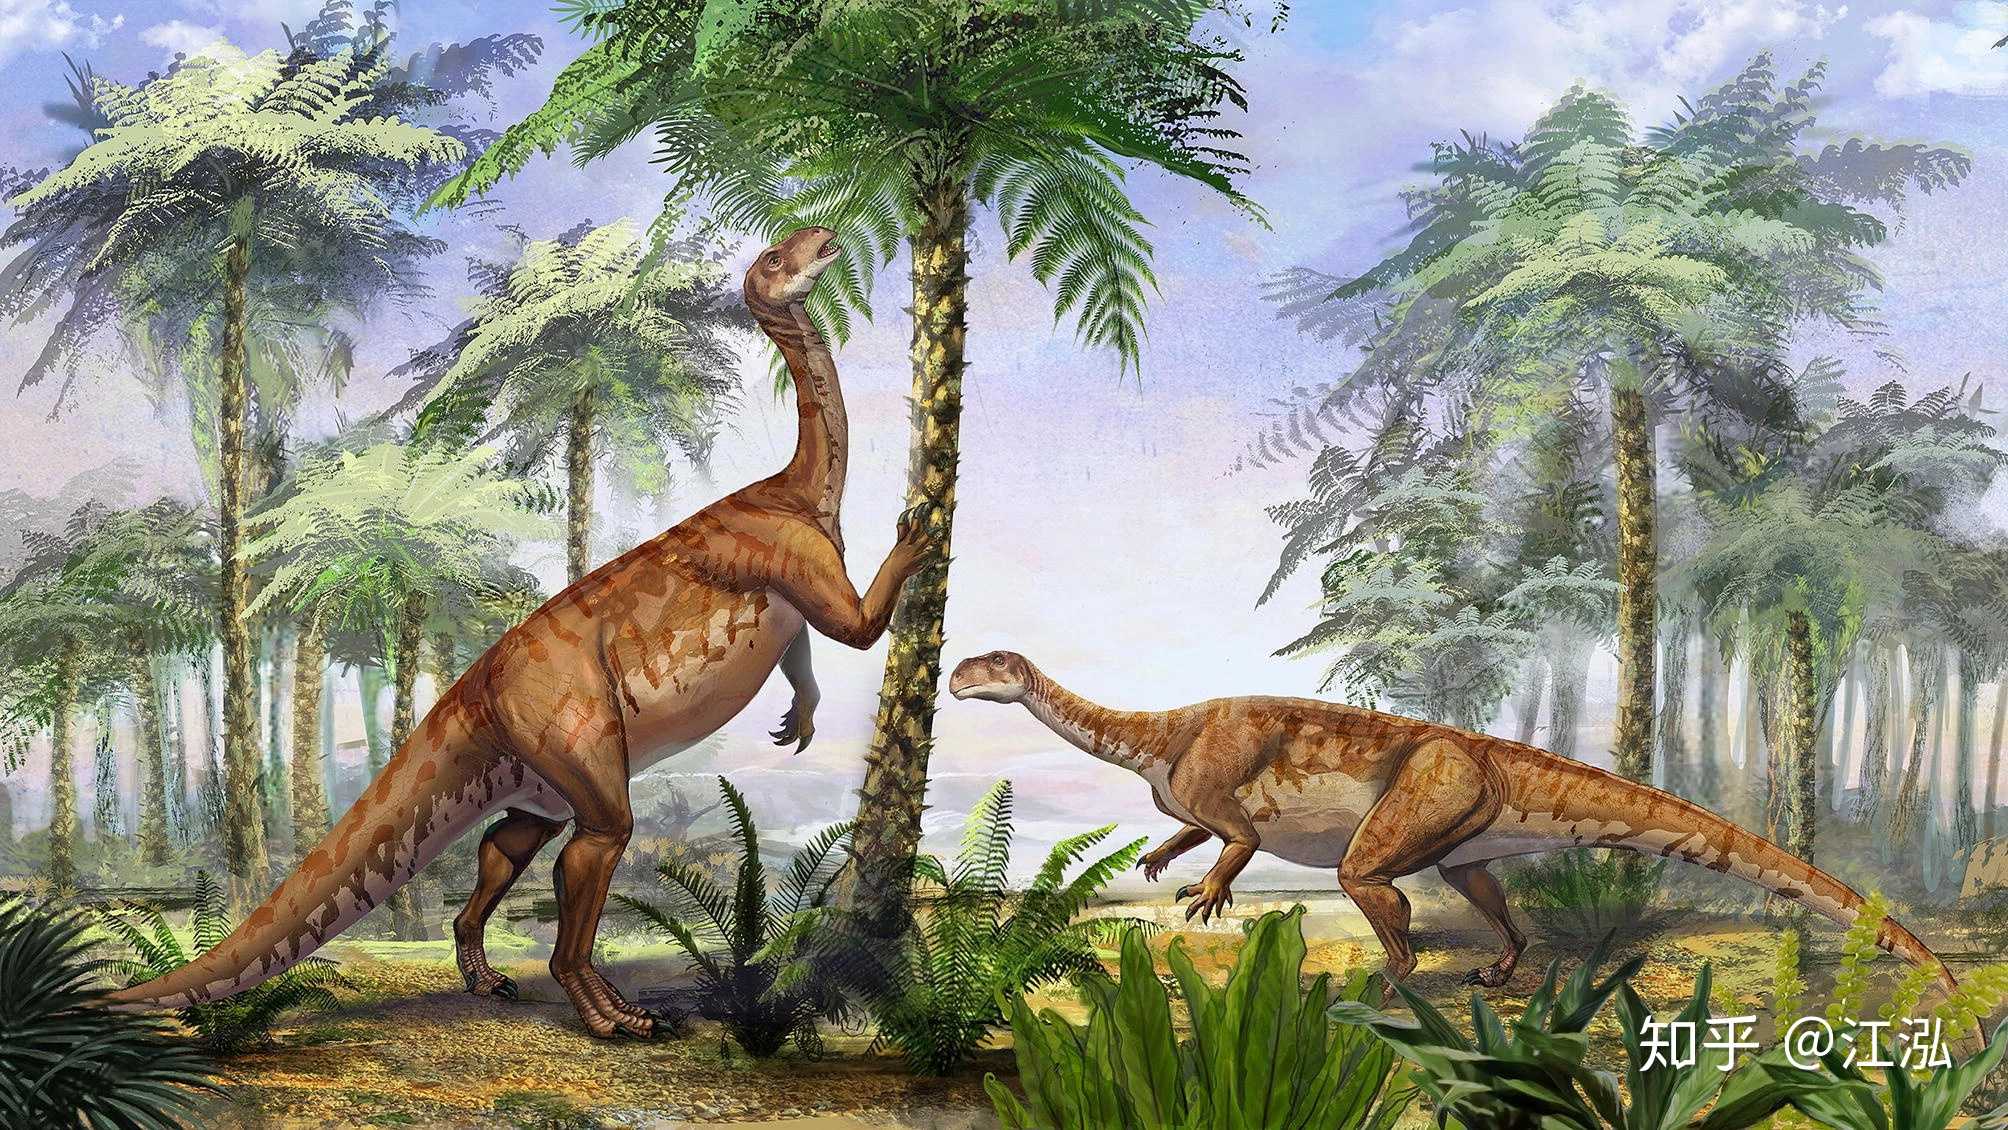 【2020年恐龙盘点】易门彩云龙(irisosaurus yimenensis)